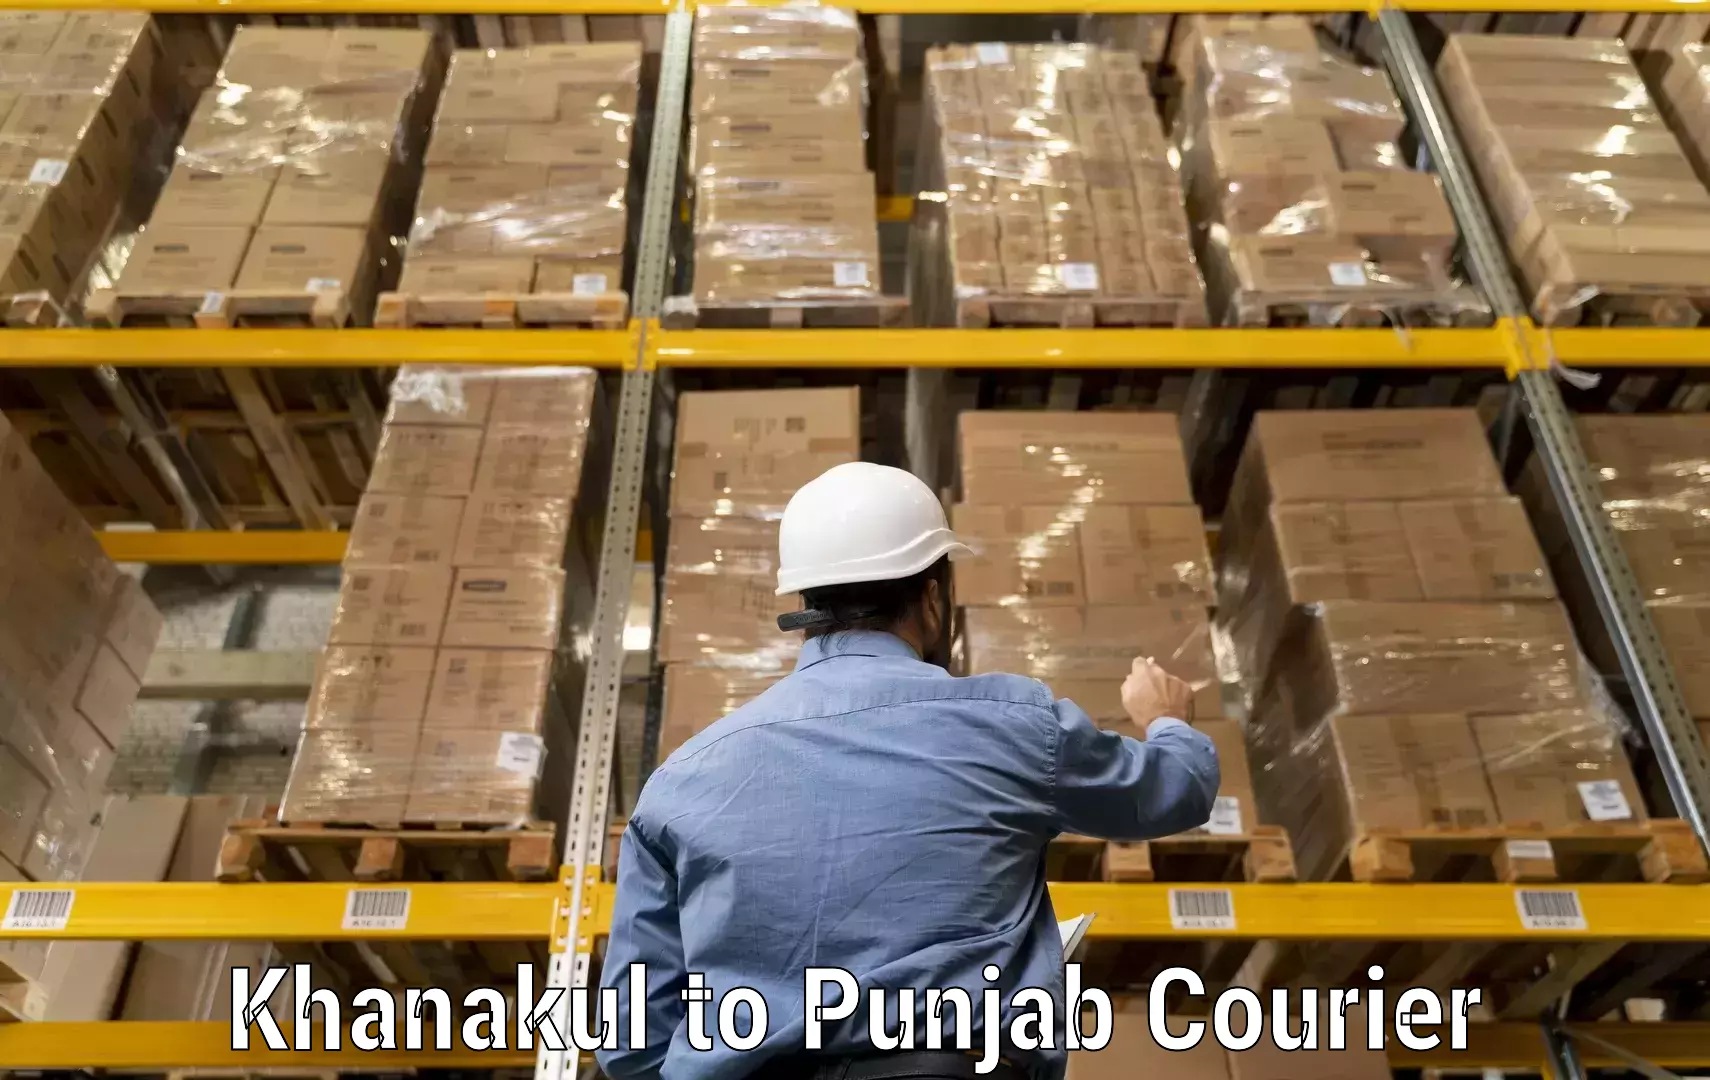 Courier service partnerships Khanakul to Punjab